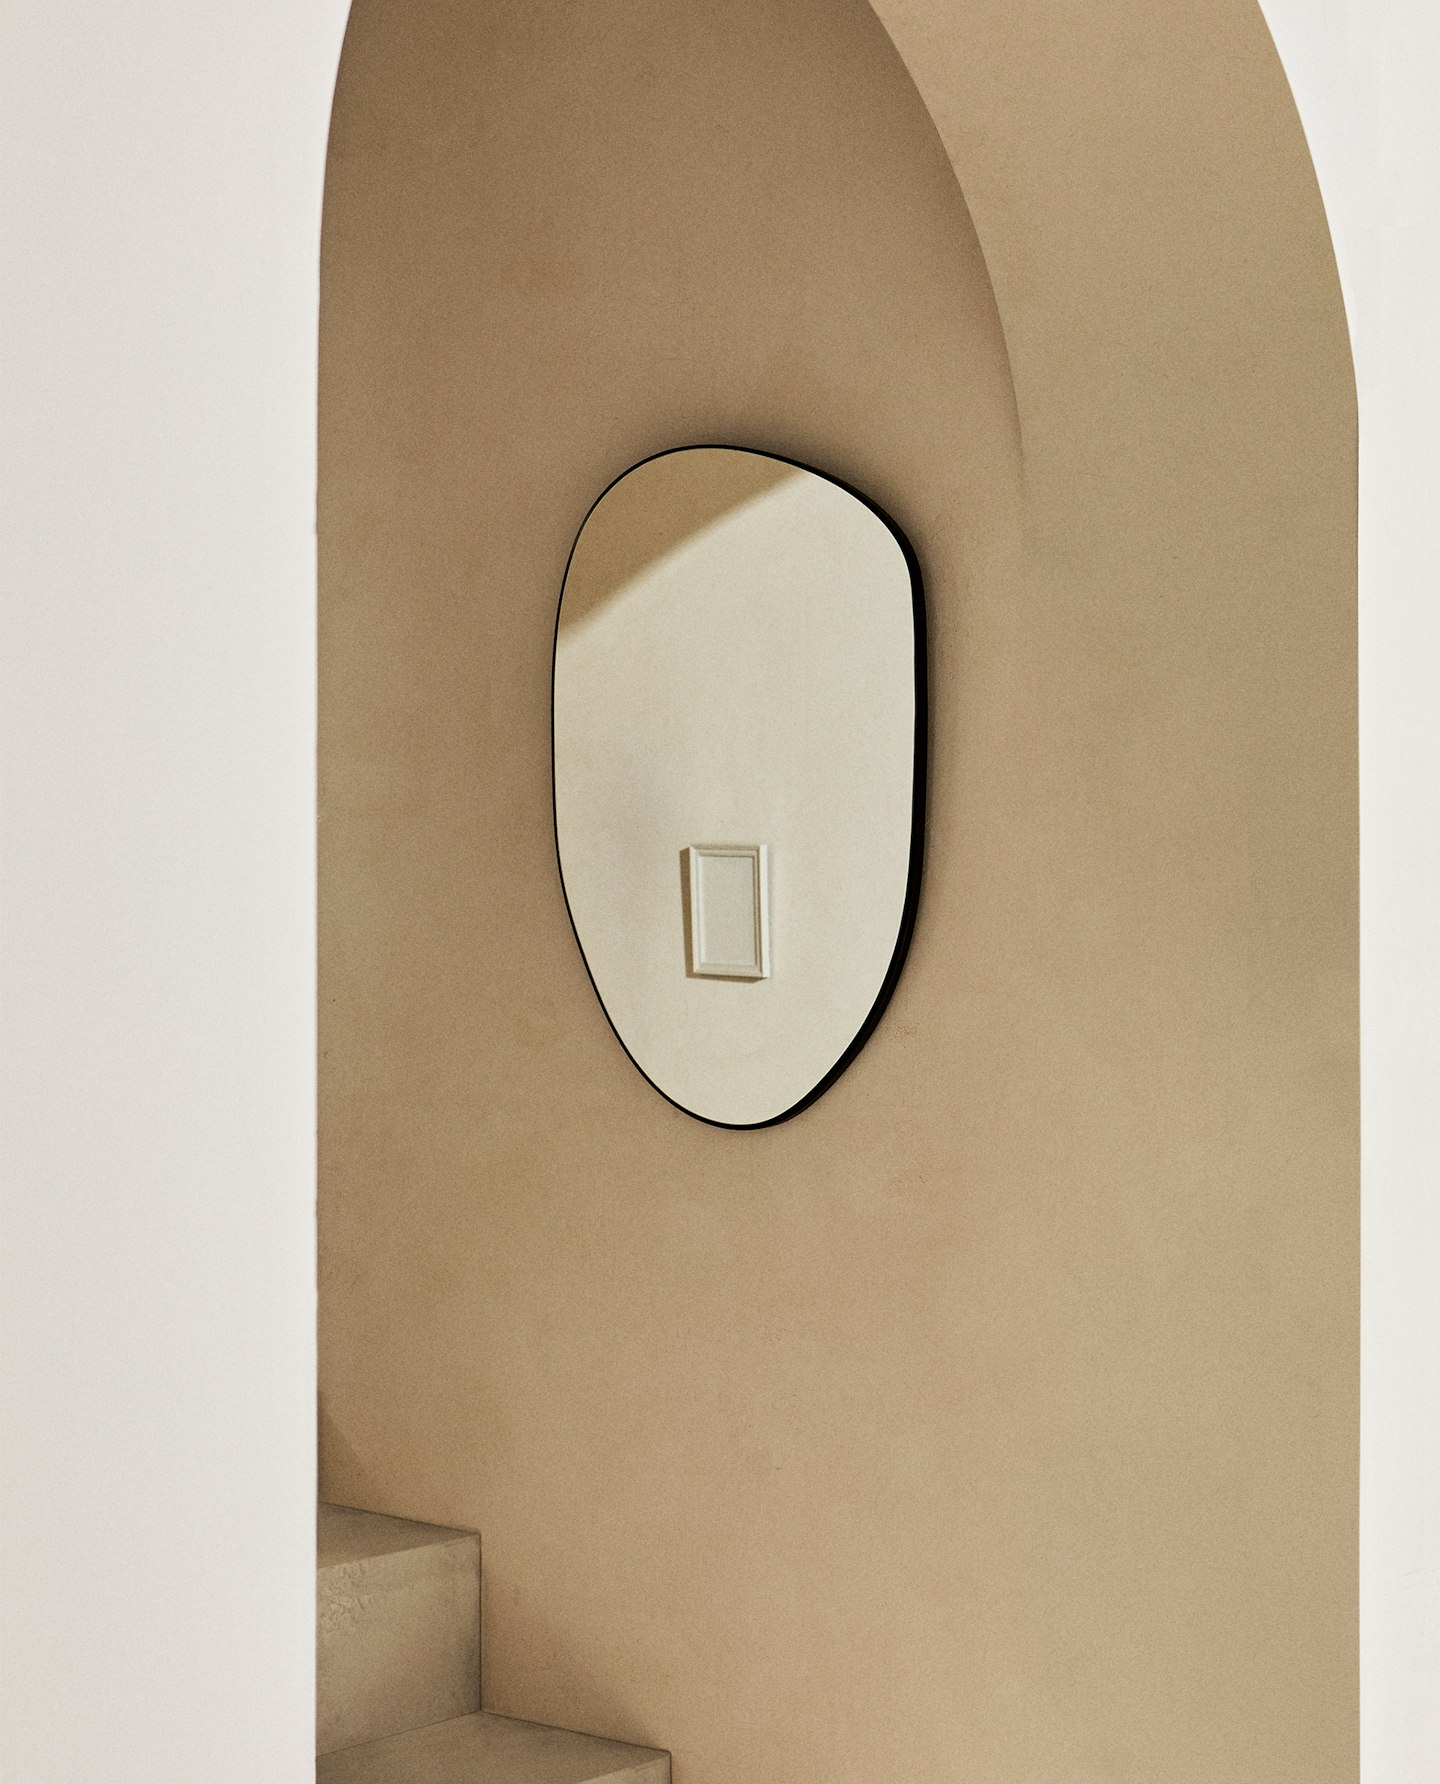 Zara Home, Small Irregular-Shaped Mirror, £89.99